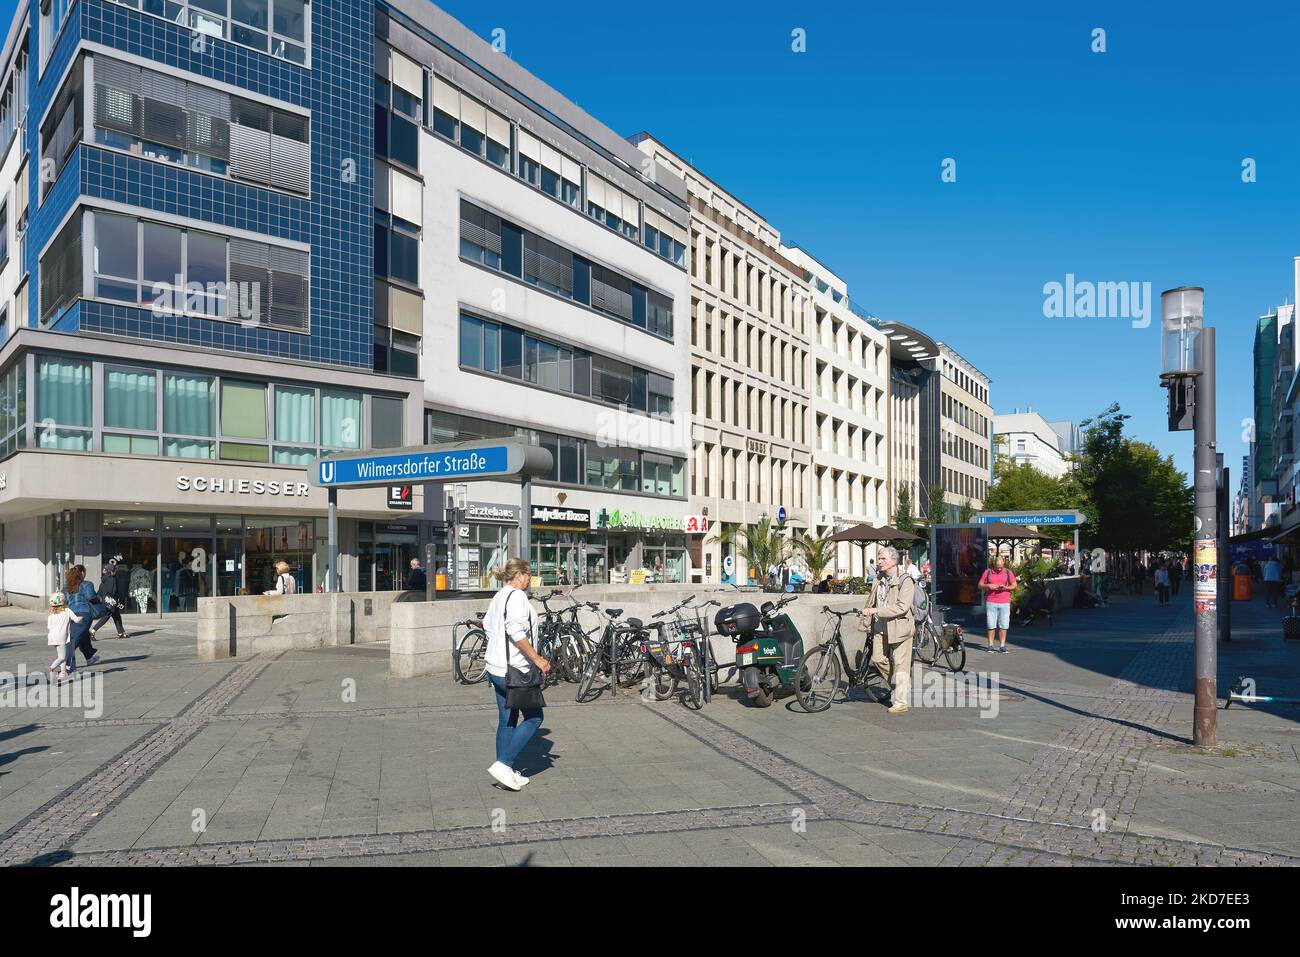 Street scene in Berlin's oldest pedestrian zone, Wilmersdorfer Strasse, one of the city's most popular shopping streets in Berlin Stock Photo